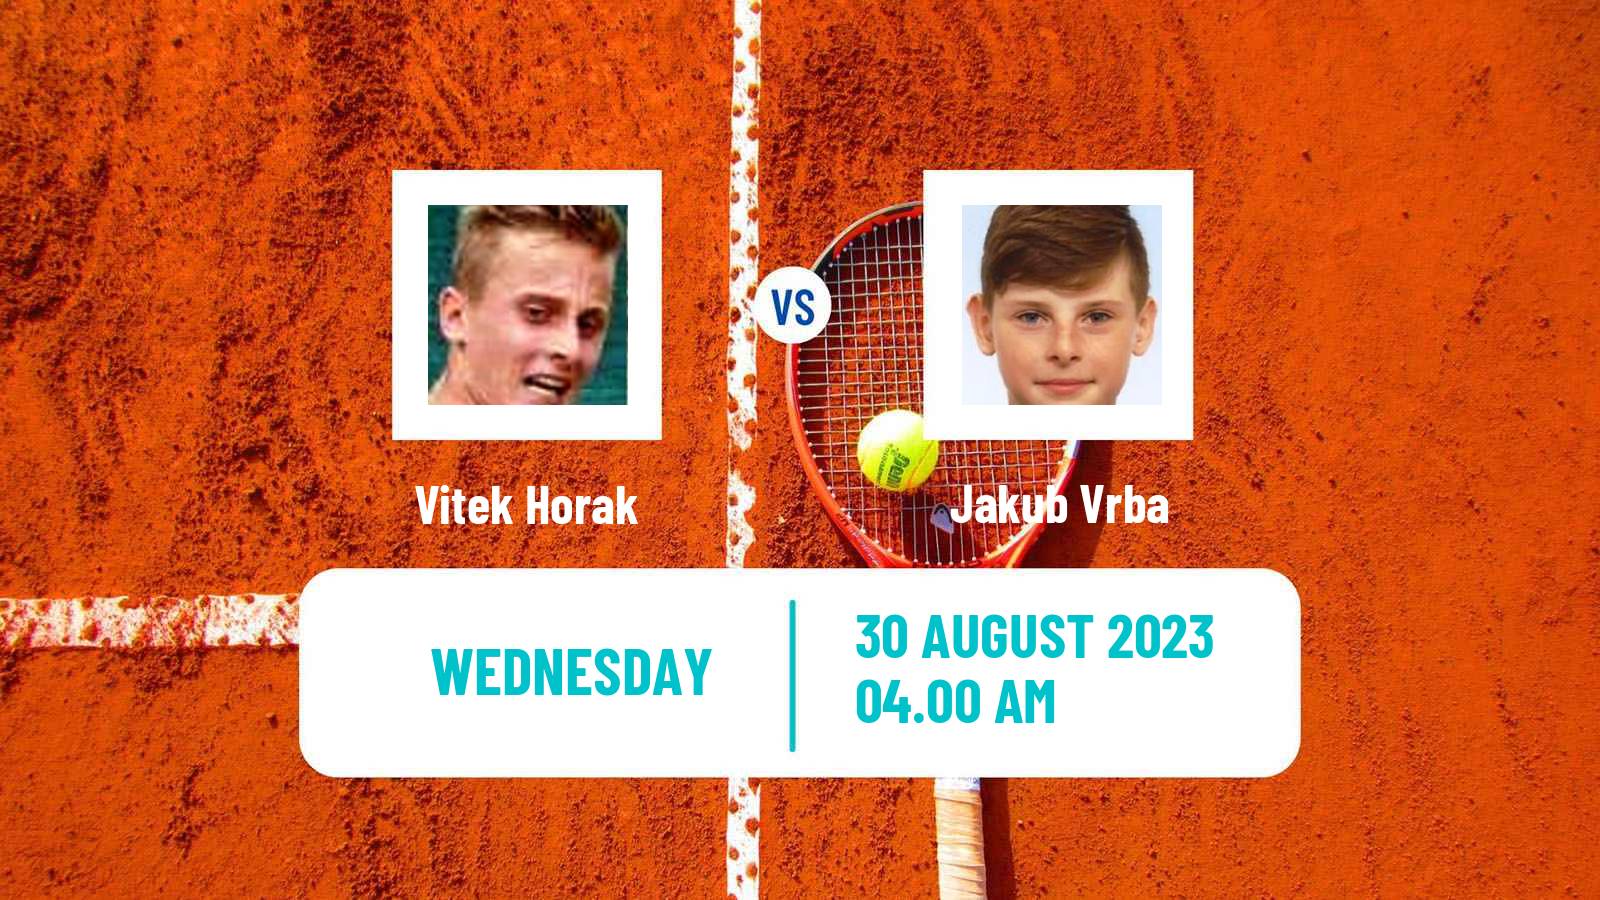 Tennis ITF M25 Jablonec Nad Nisou 2 Men Vitek Horak - Jakub Vrba